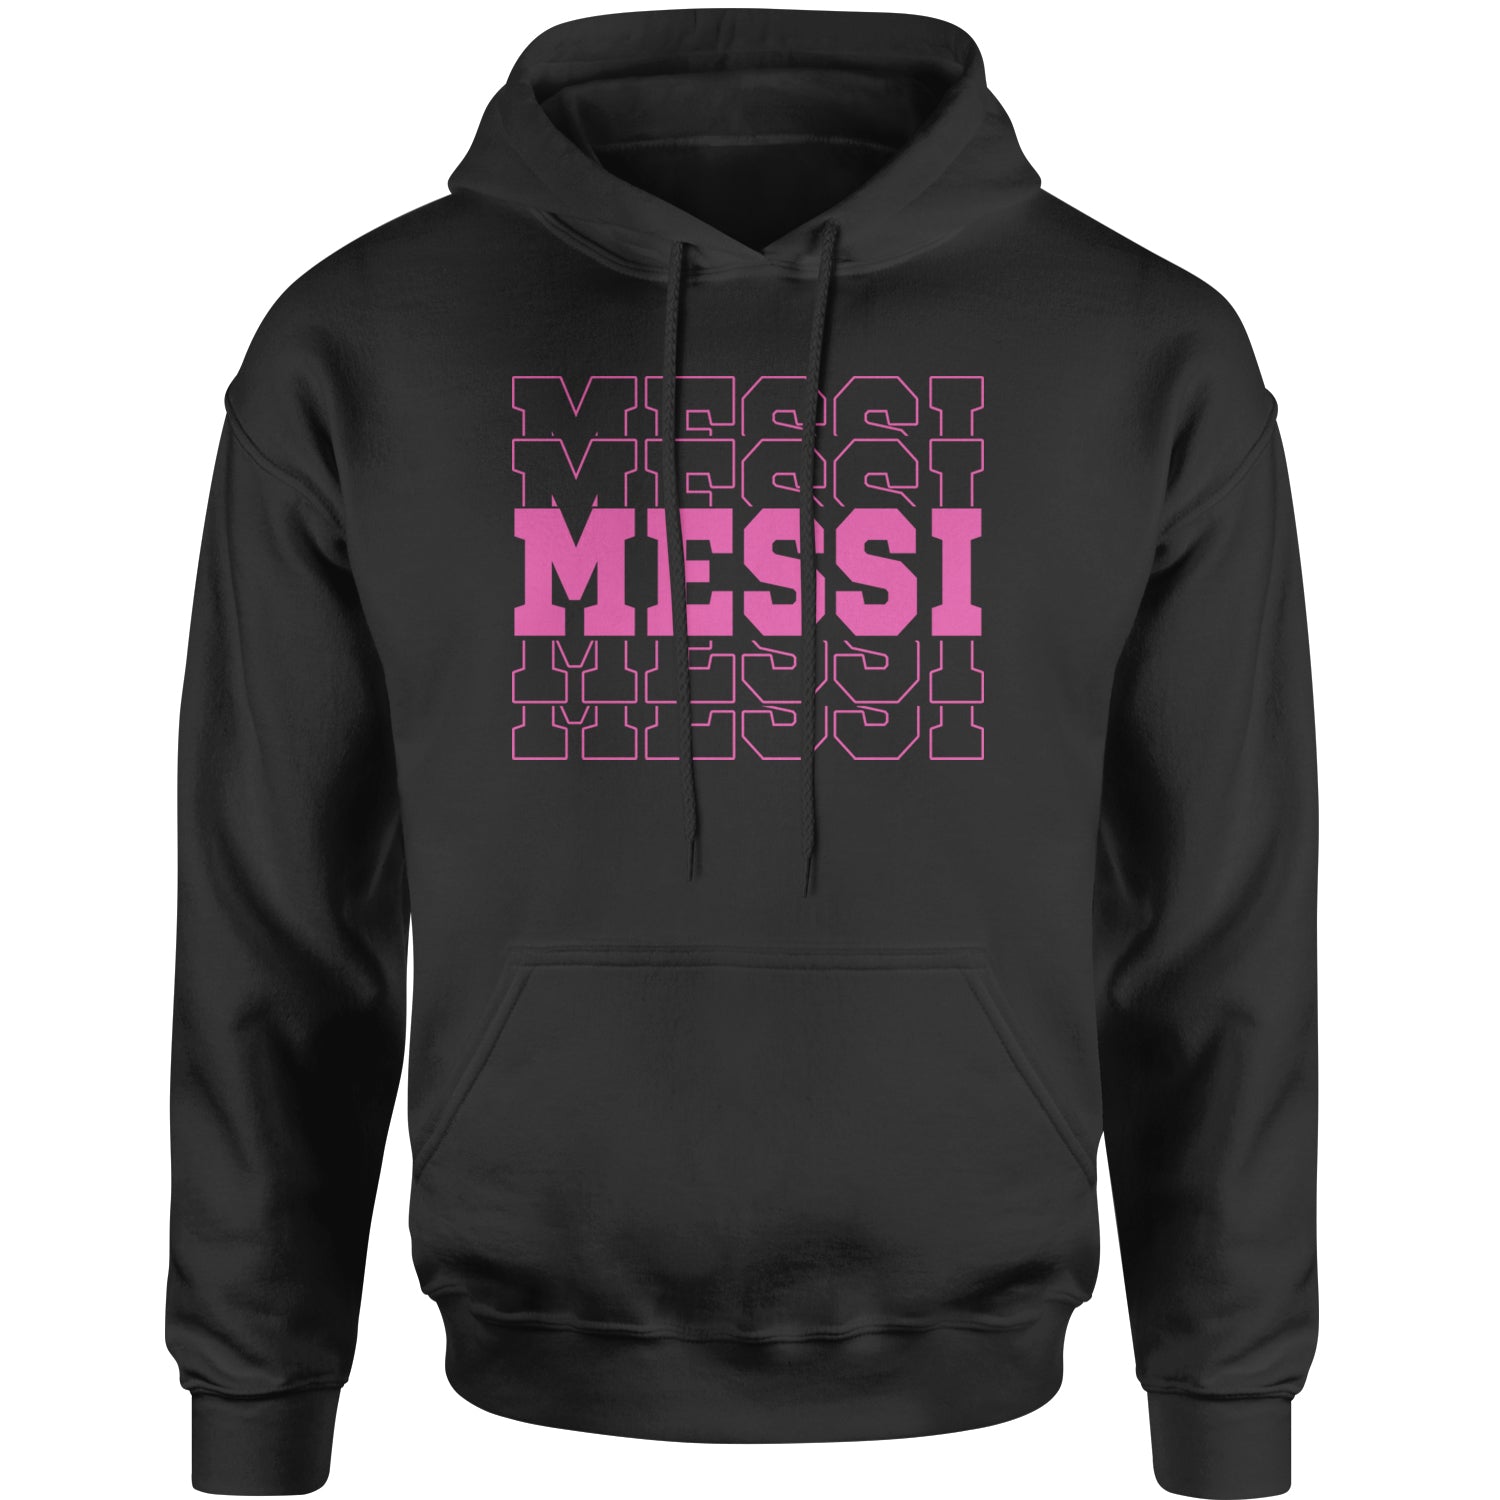 Messi Miami Futbol Adult Hoodie Sweatshirt